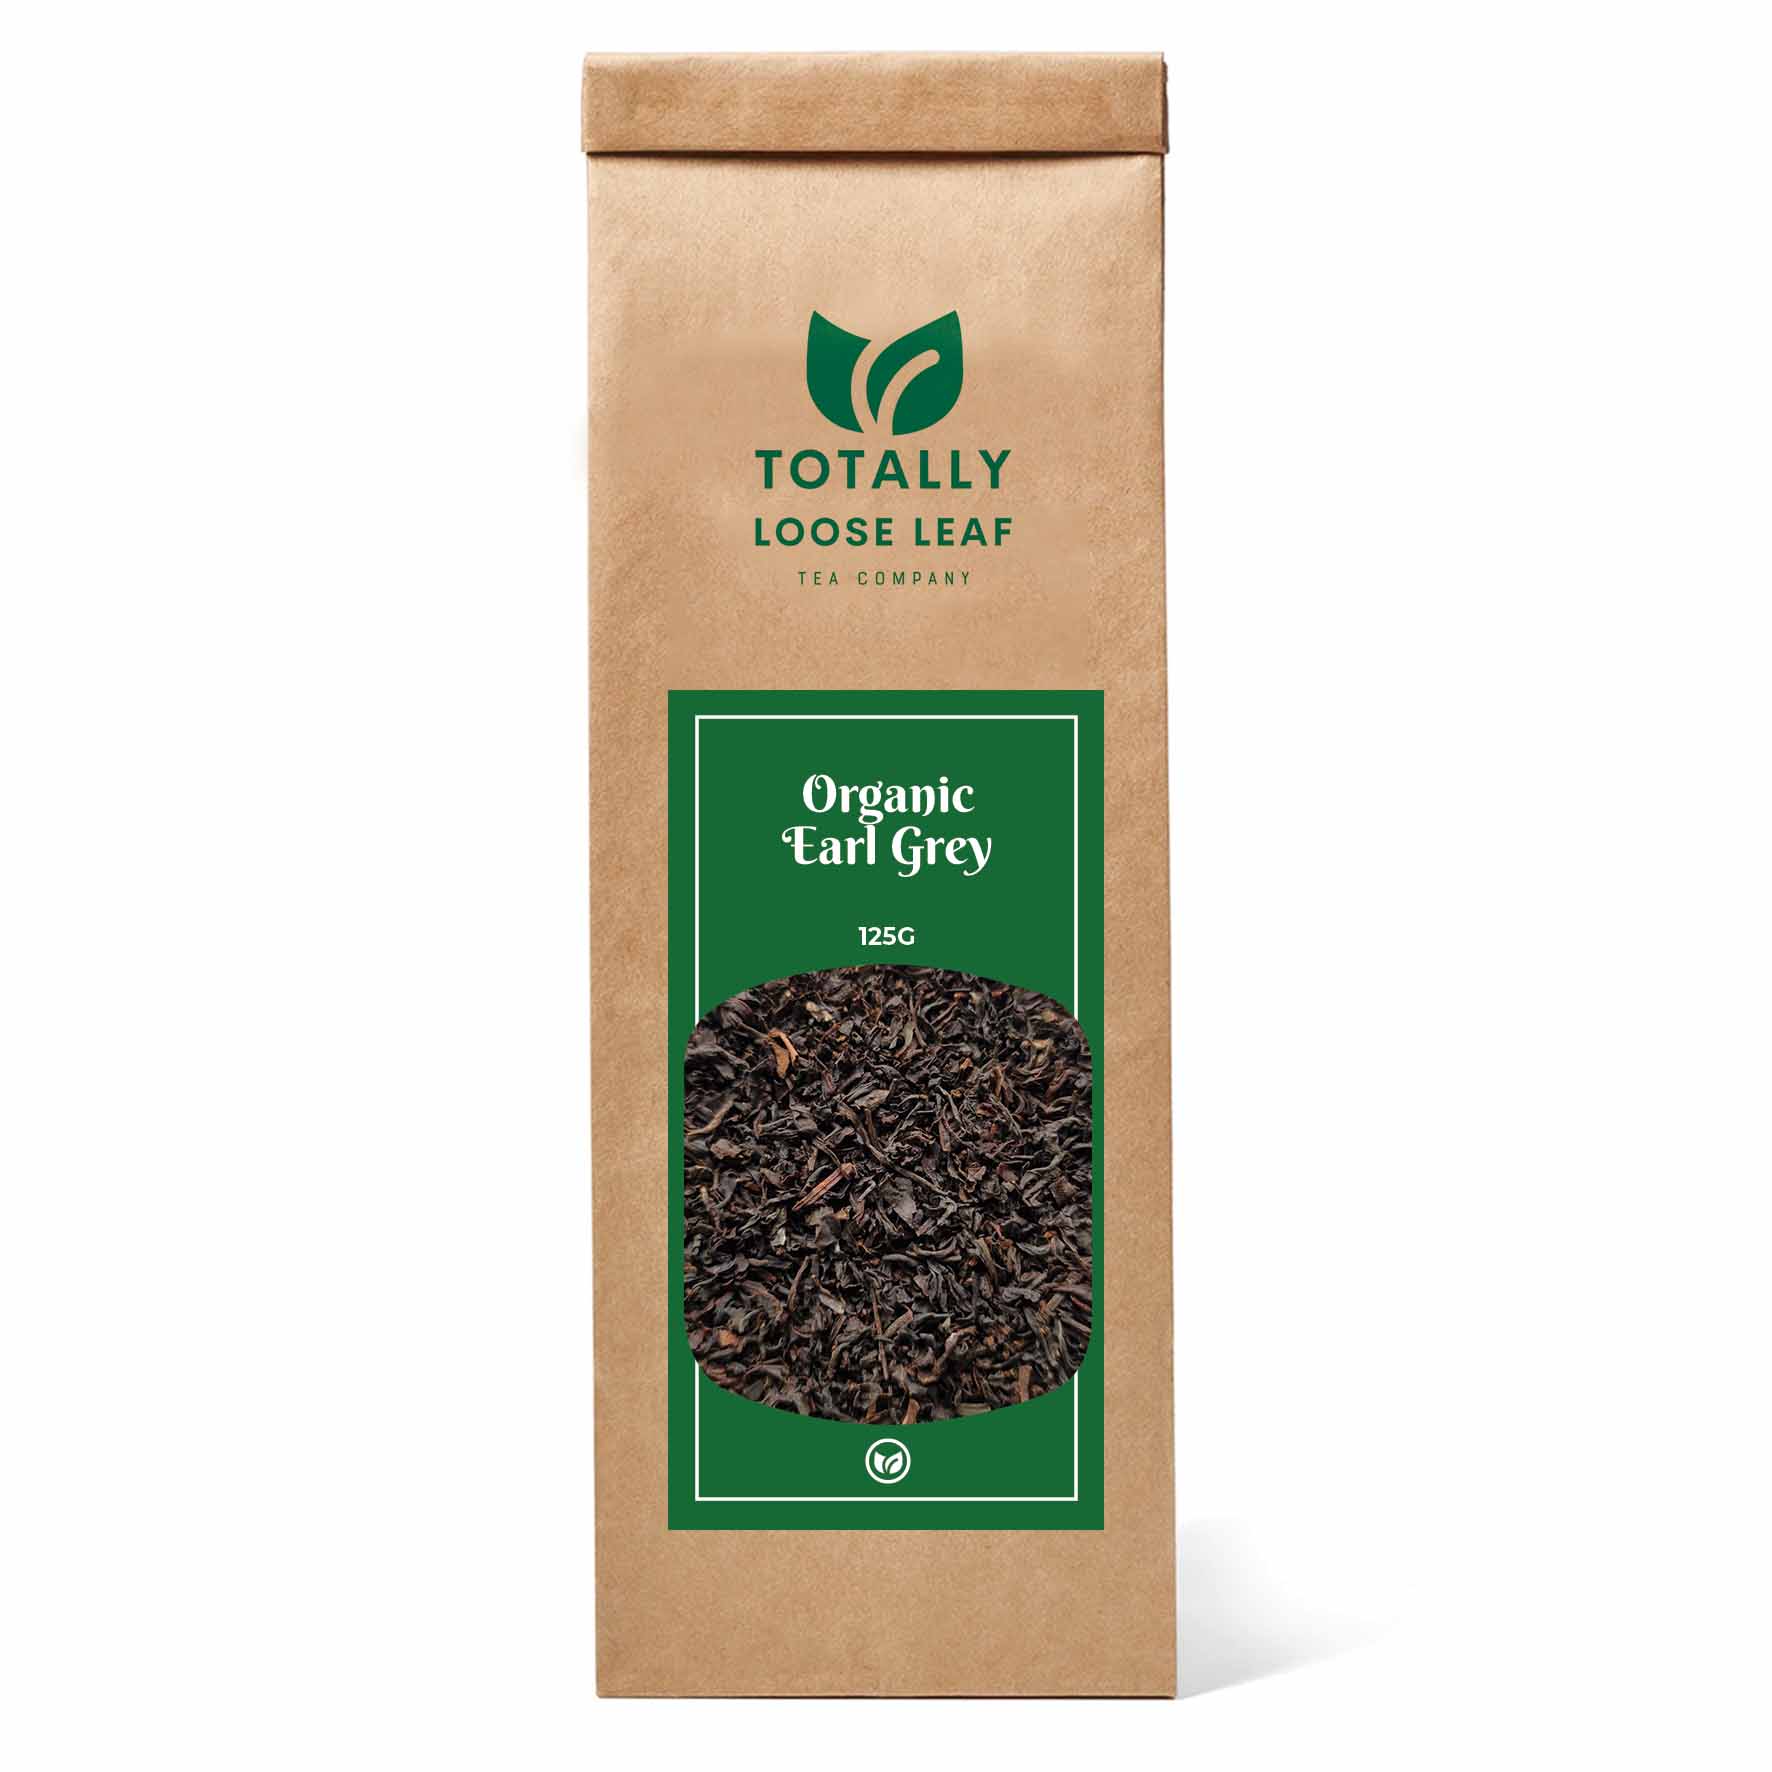 Organic Earl Grey Breakfast Loose Leaf Tea - one pouch